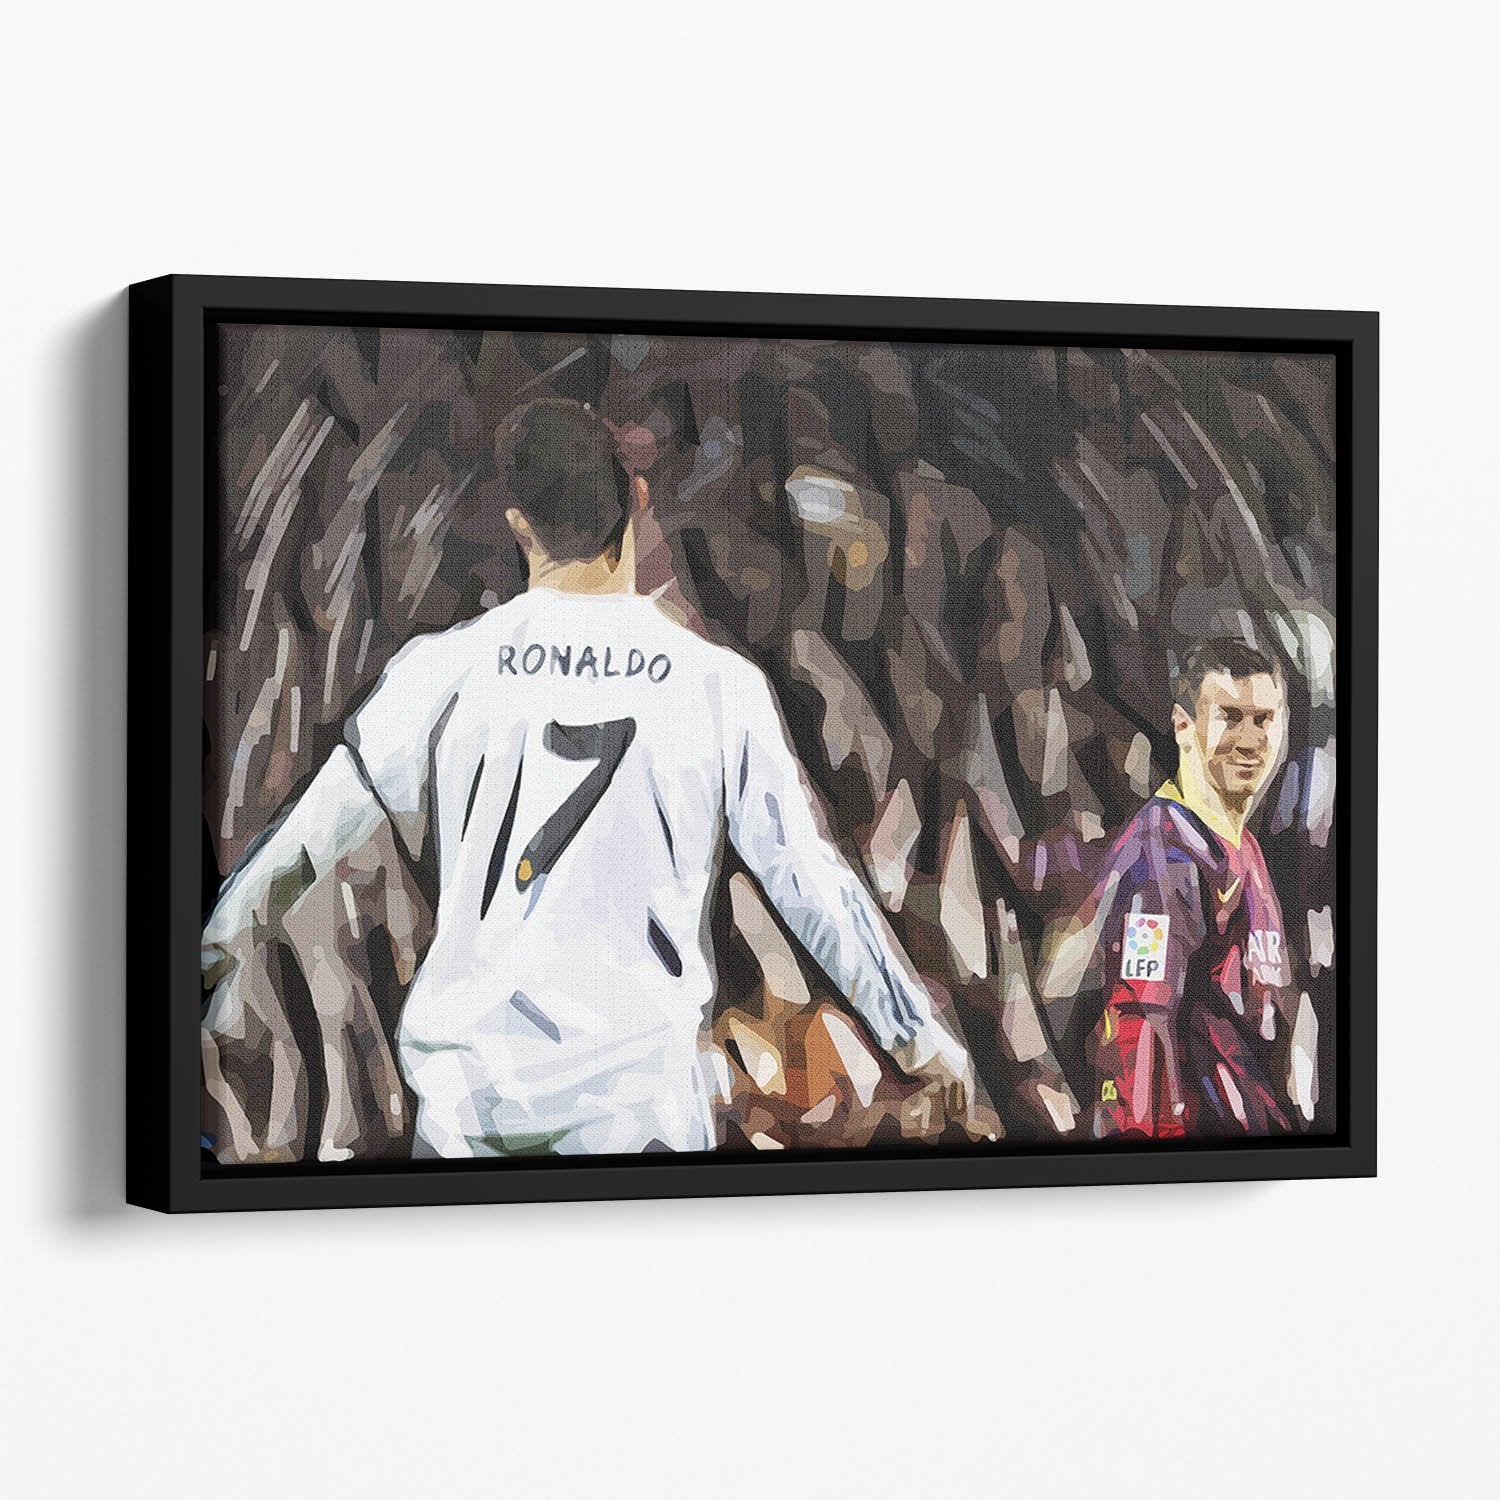 Ronaldo Vs Messi Floating Framed Canvas